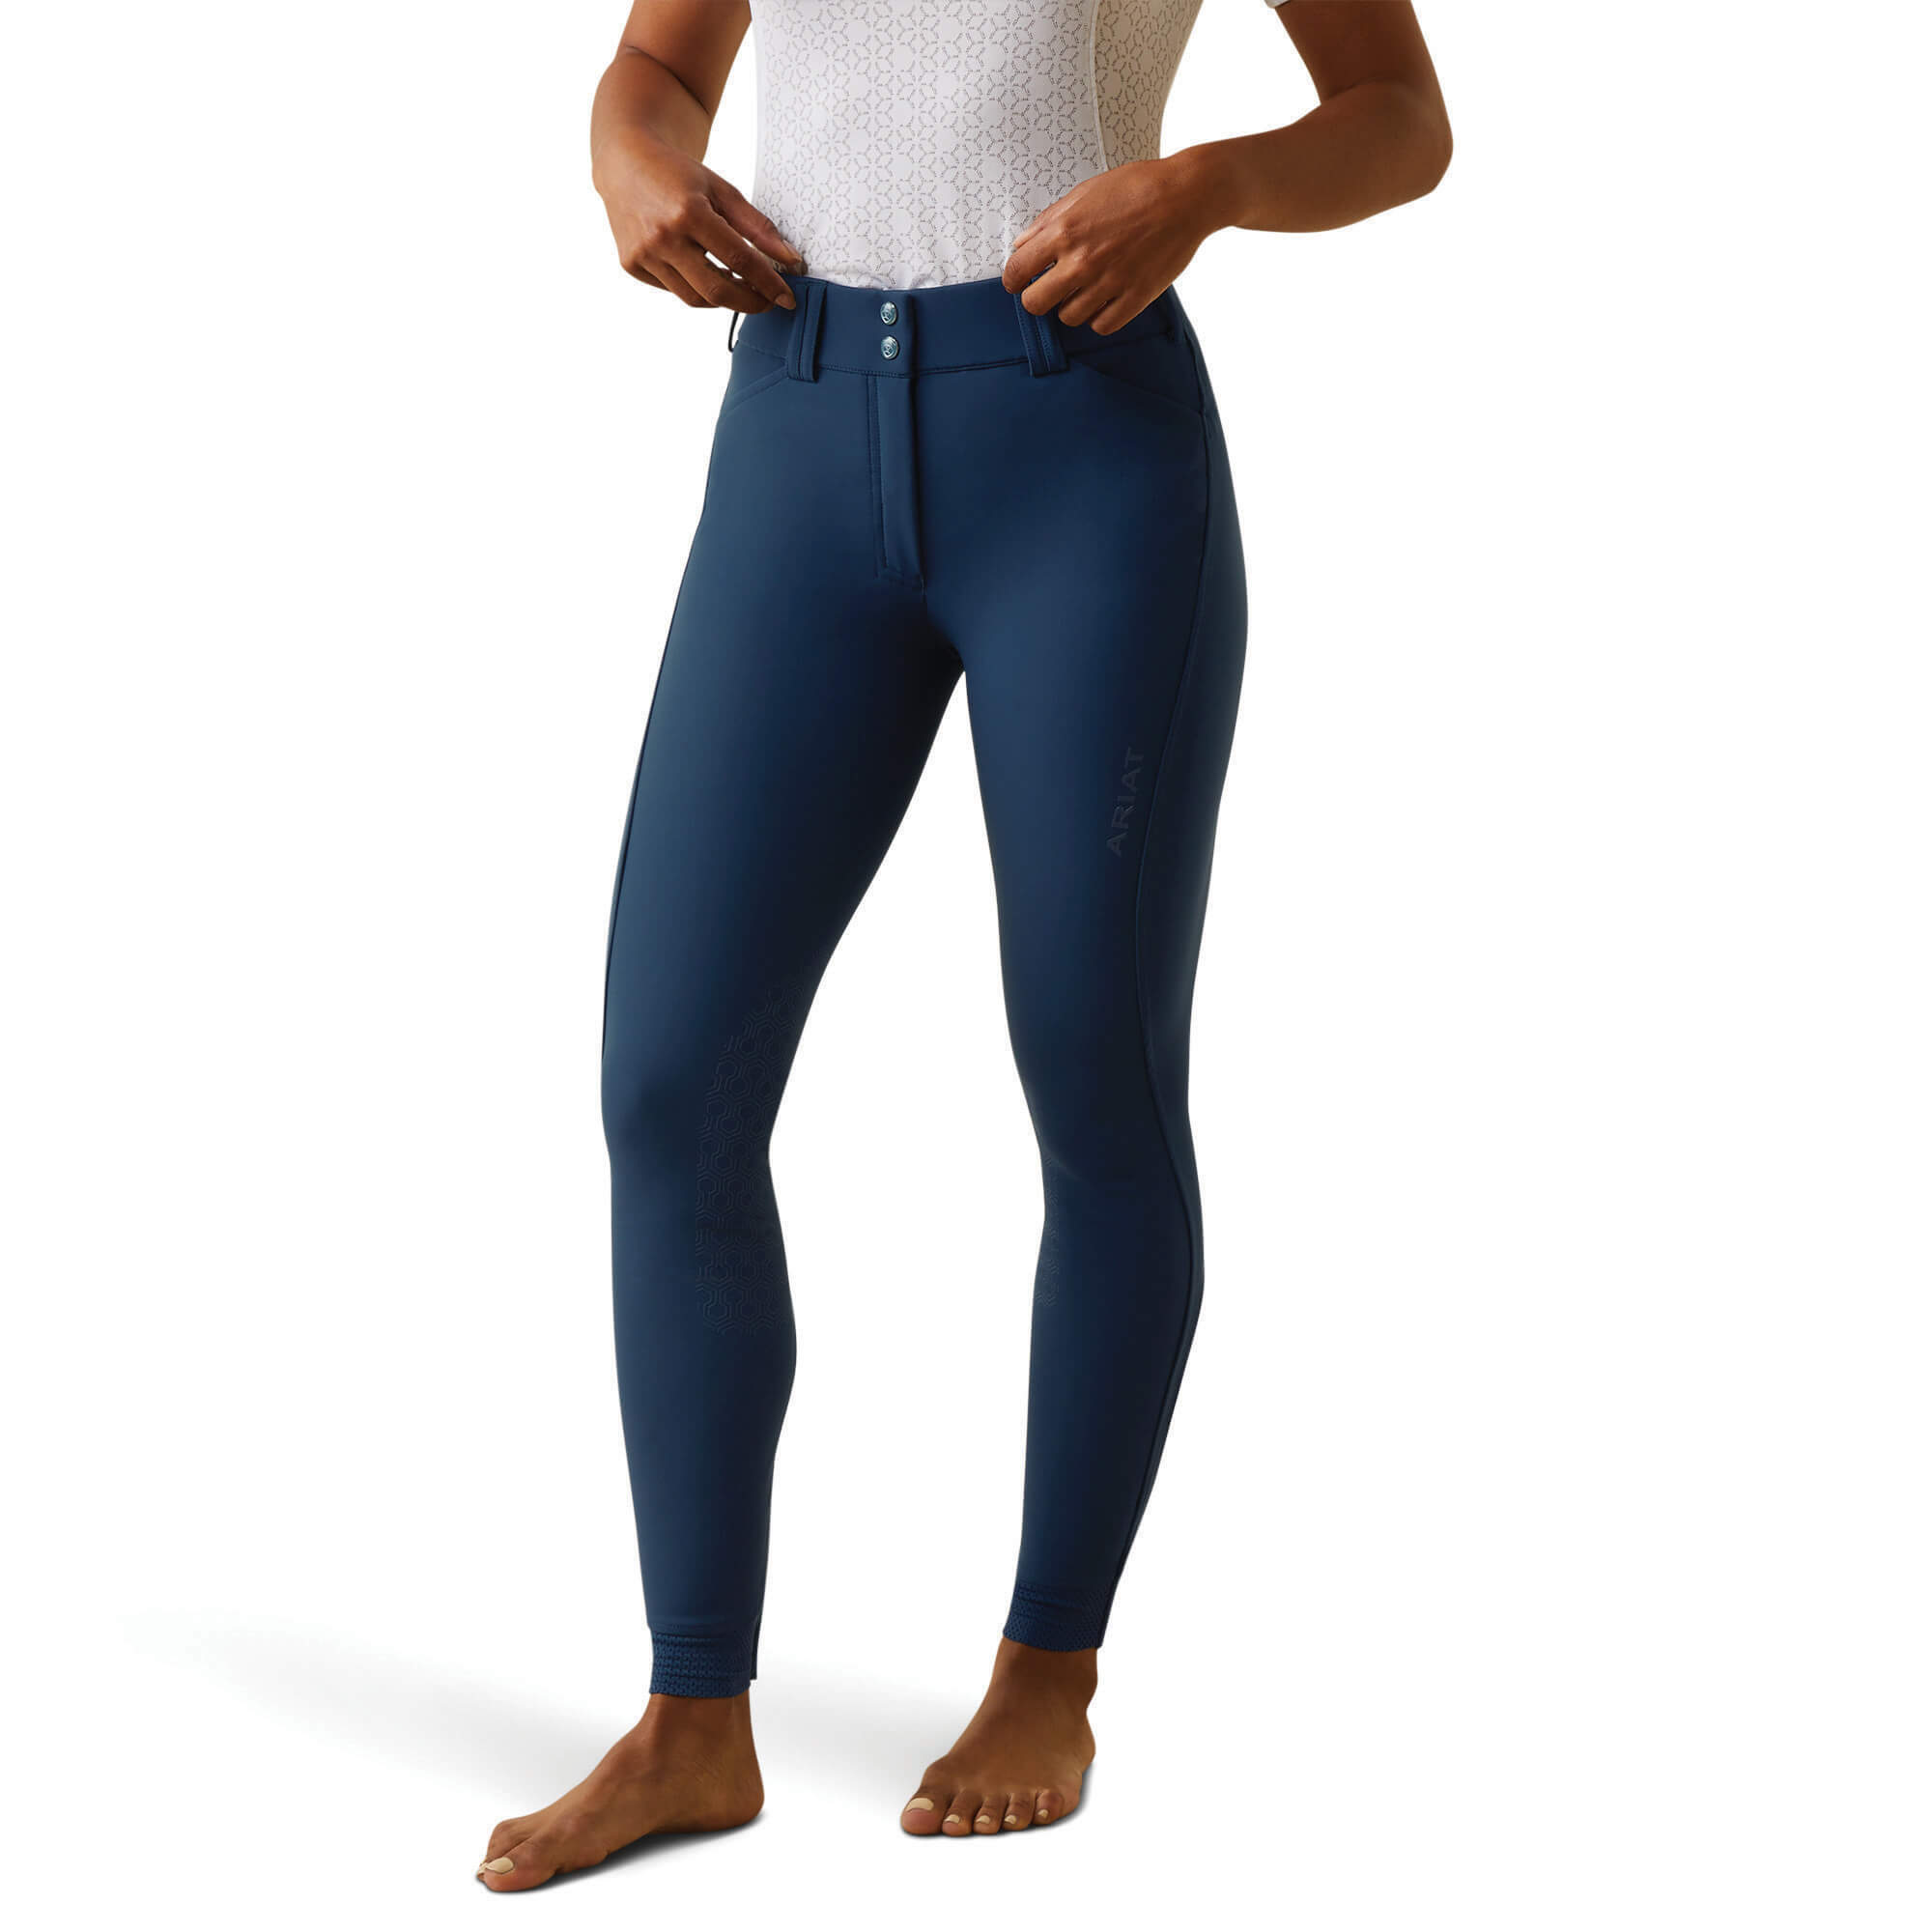 ZZAL leggings womens High Waist Yoga Pants with Pockets, 4 Ways